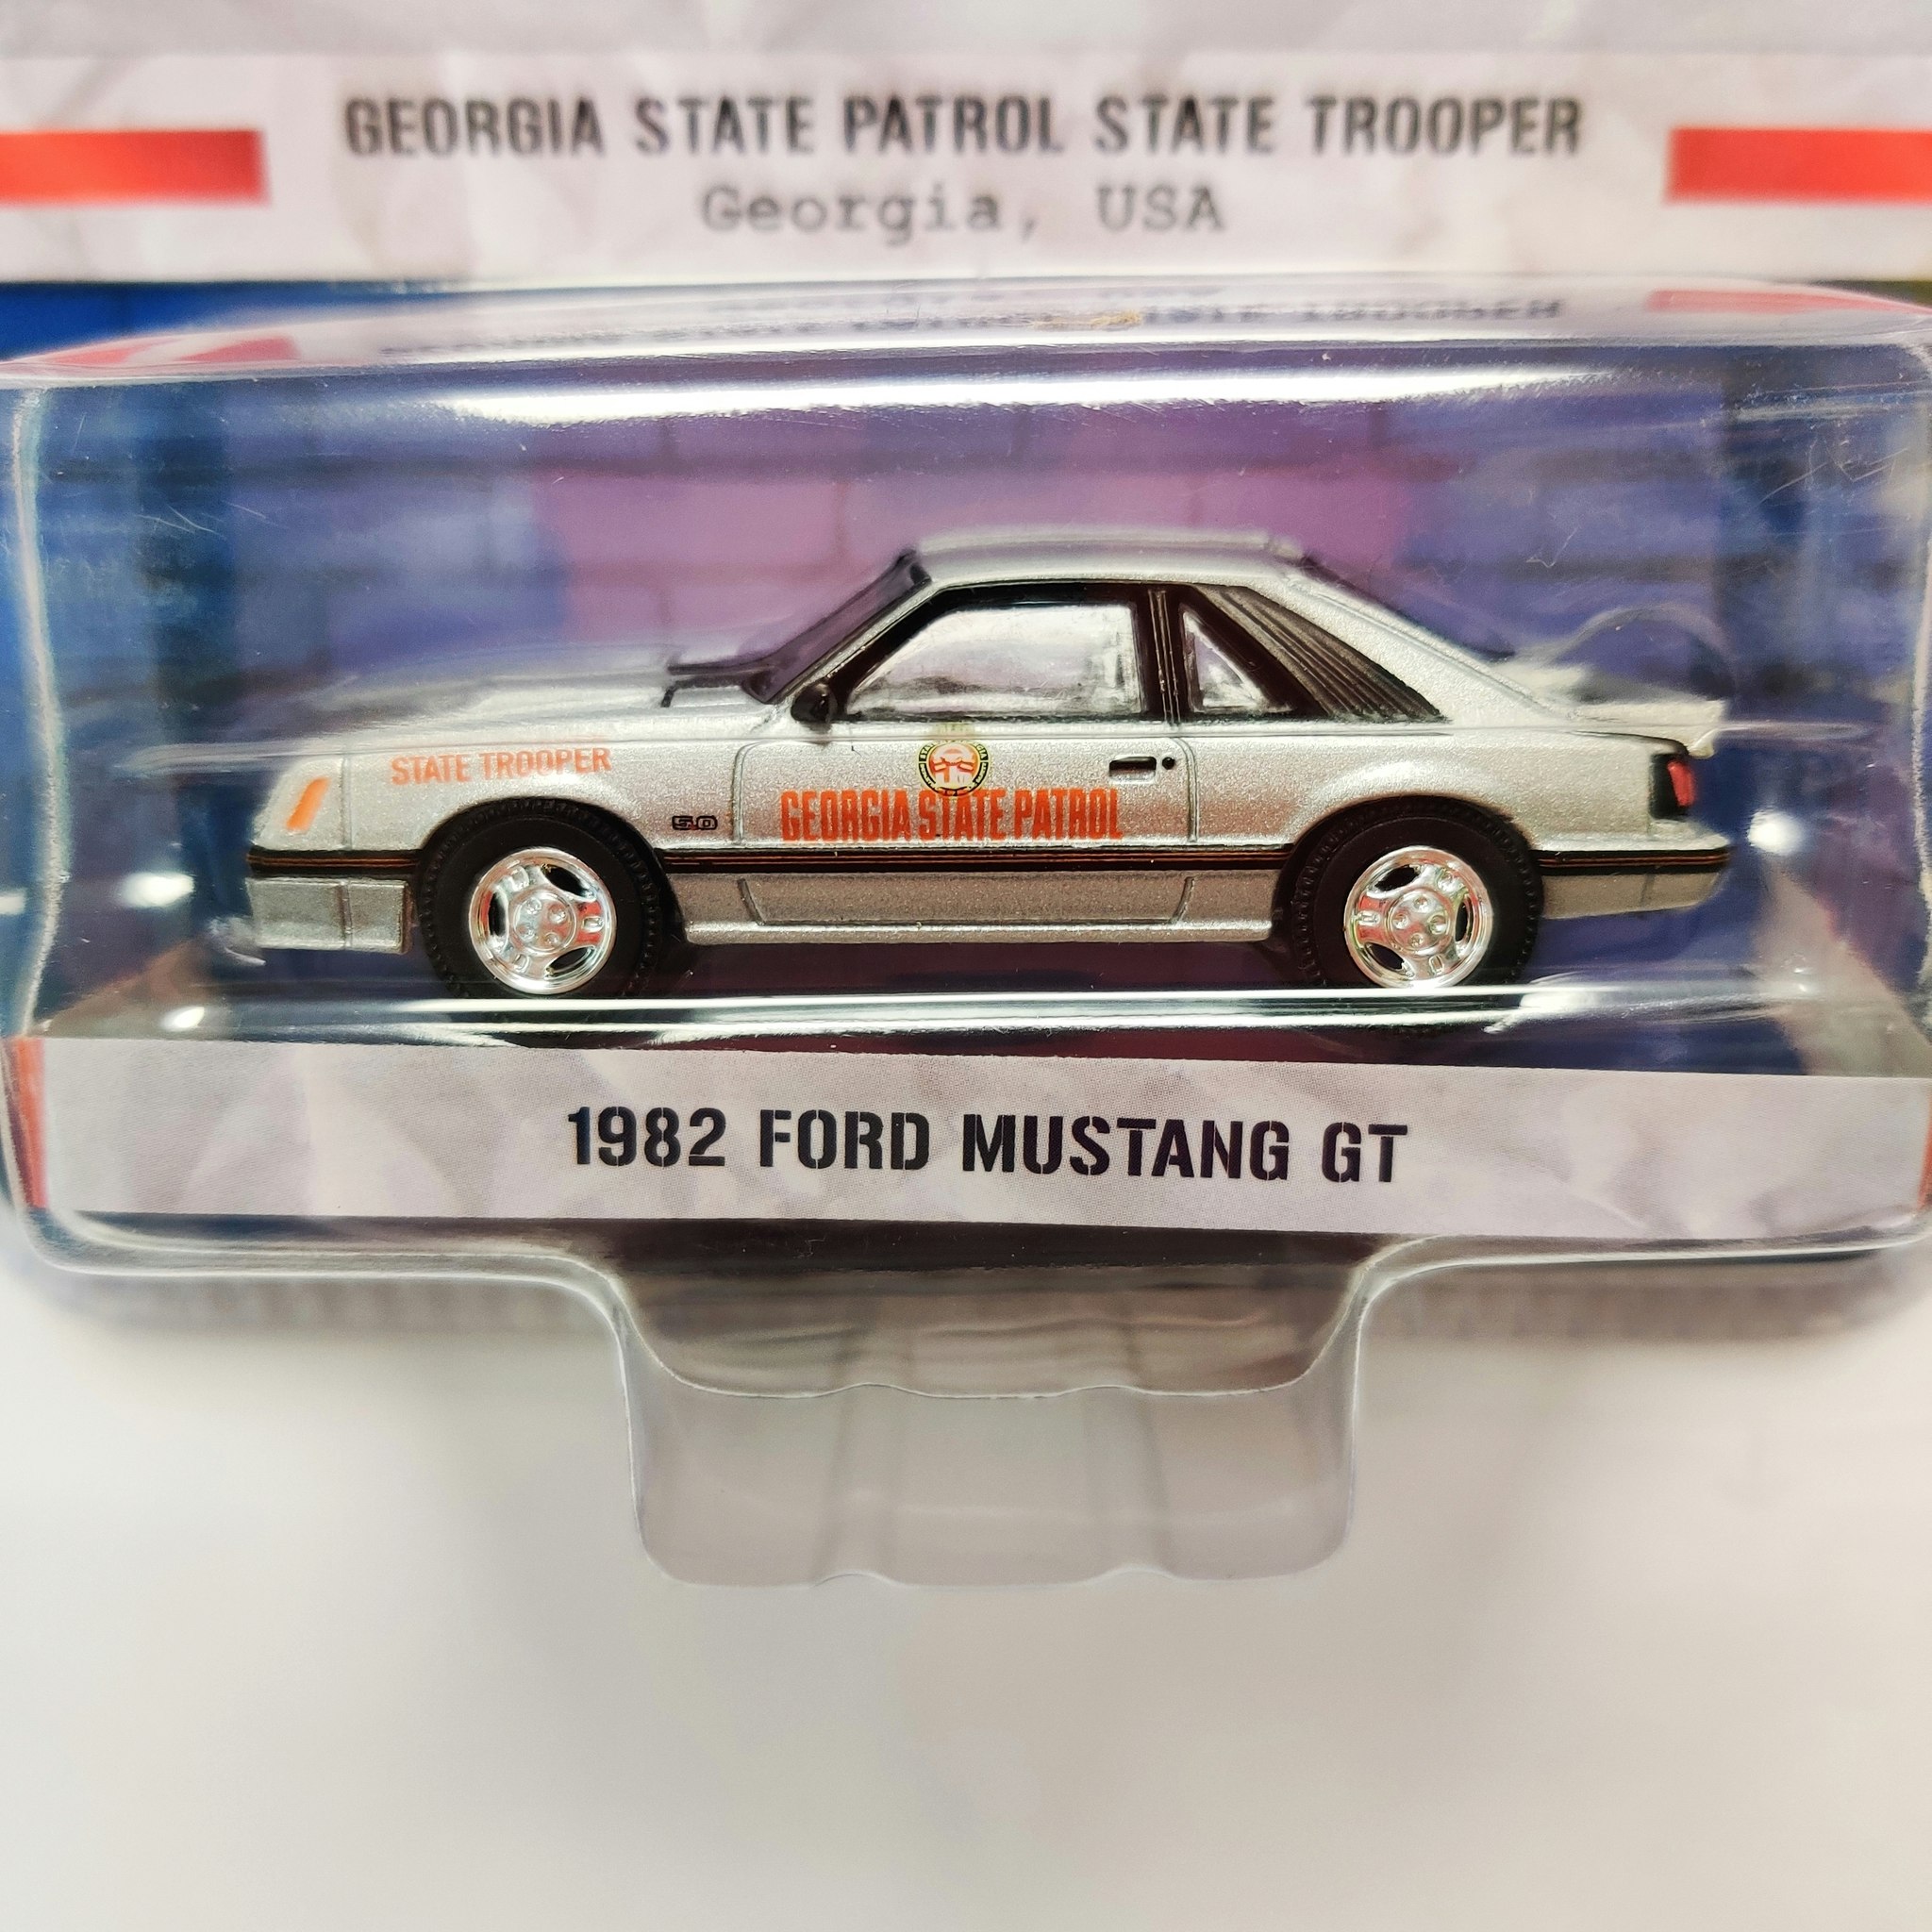 Skala 1/64 Greenlight, "Hot Pursuit", Ford Mustang GT 1982 - Georgia State patrol/trooper